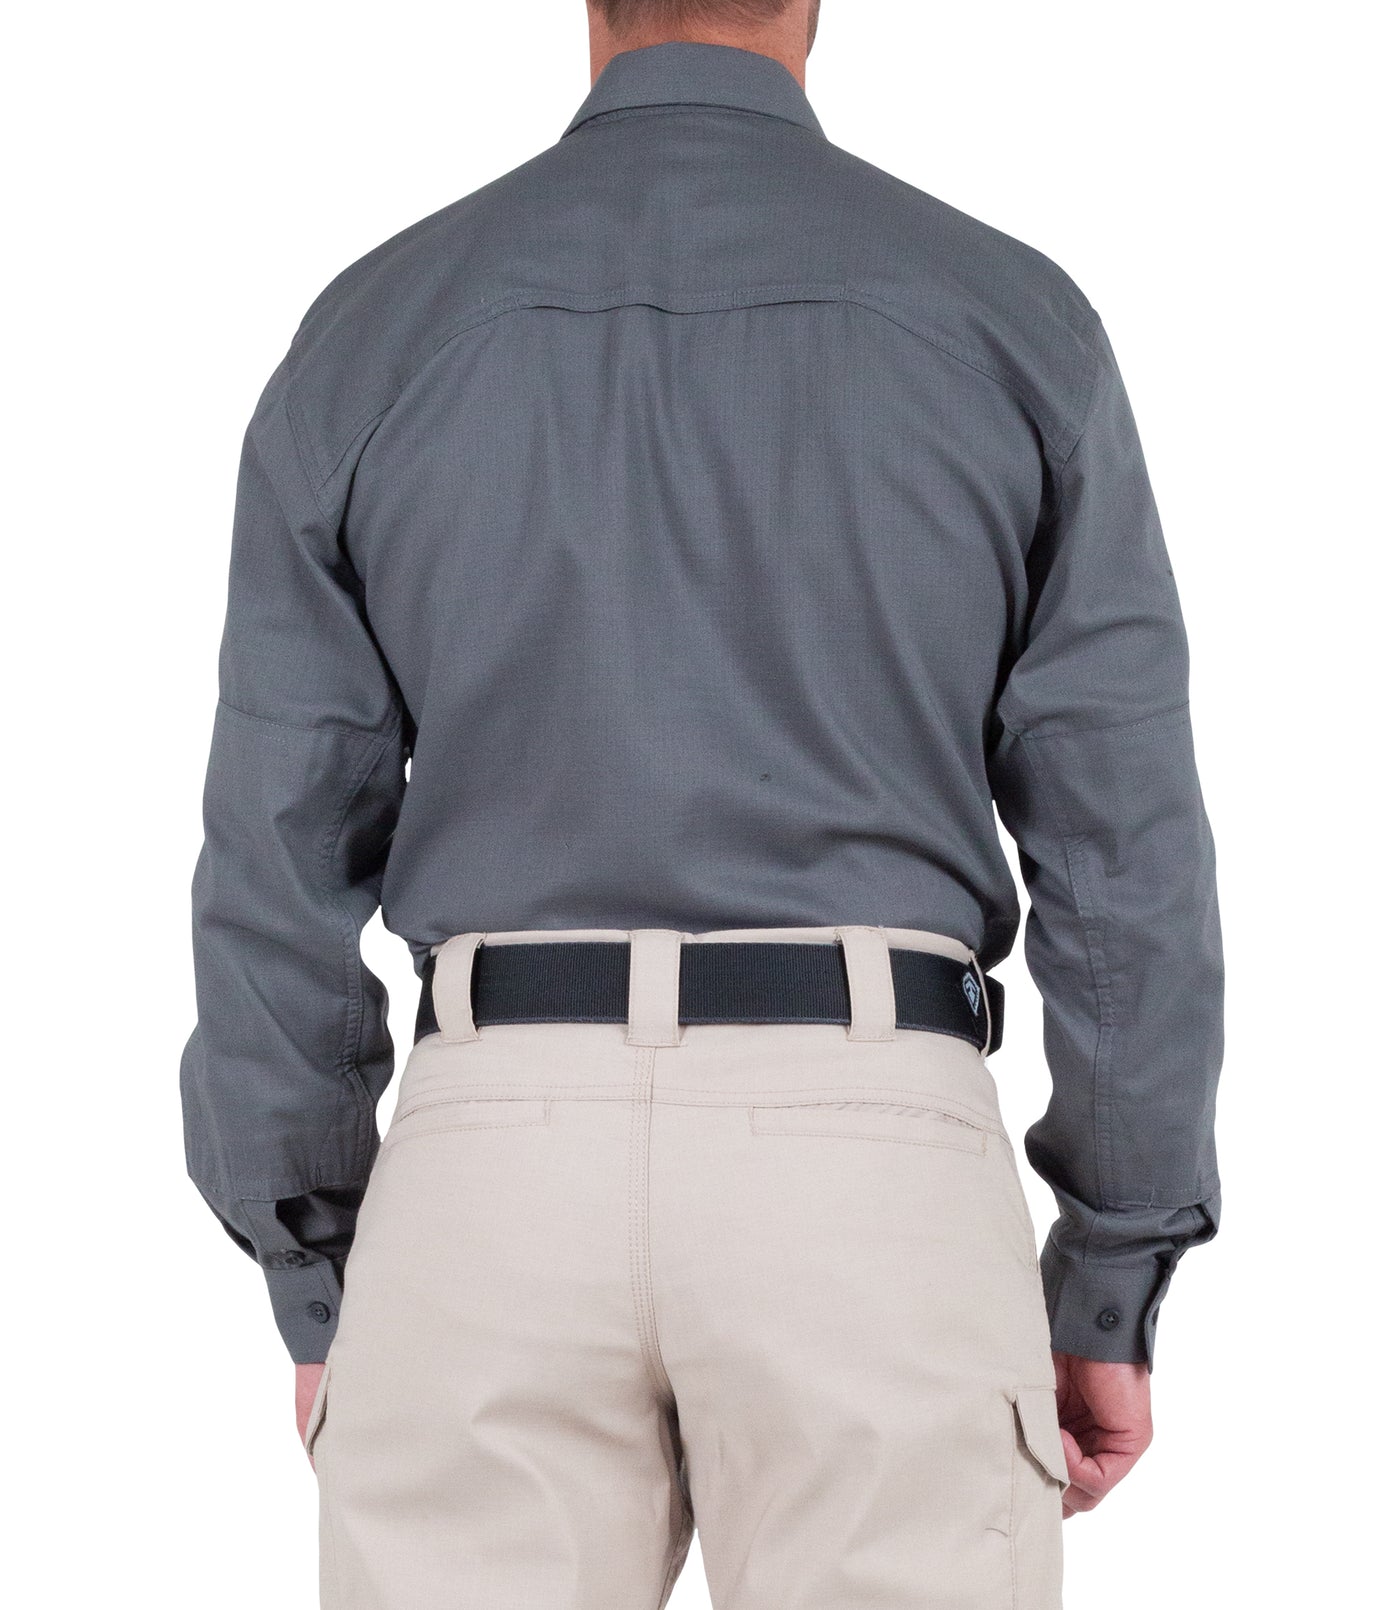 First Tactical Men's V2 Tactical Long Sleeve Shirt - Wolf Gray - 111006-036-XL-R